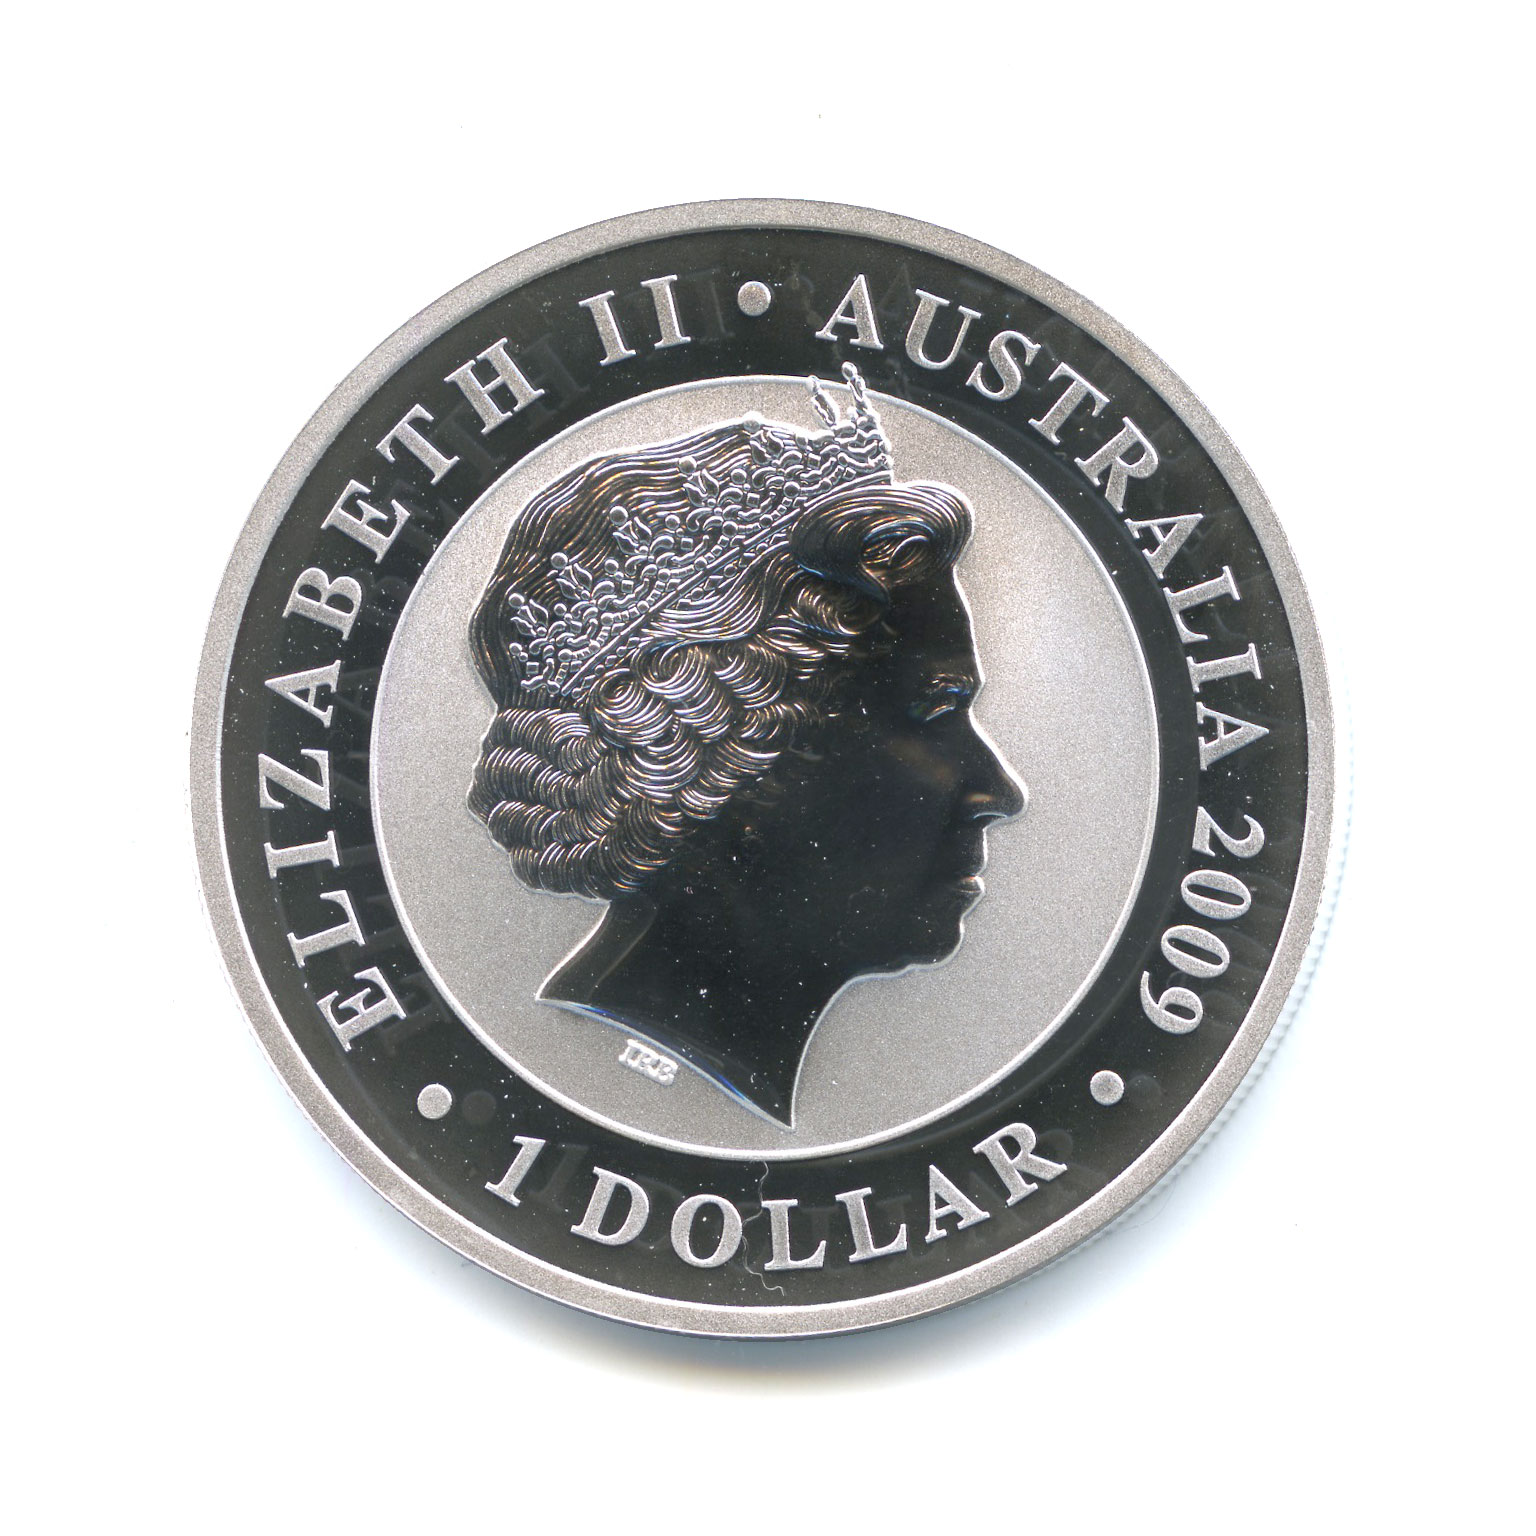 1 доллар 2009 года. 2 Доллар 2019 Австралия полиция. Купить монету 1 австралийский доллар Елизаветы 2 с коалой.